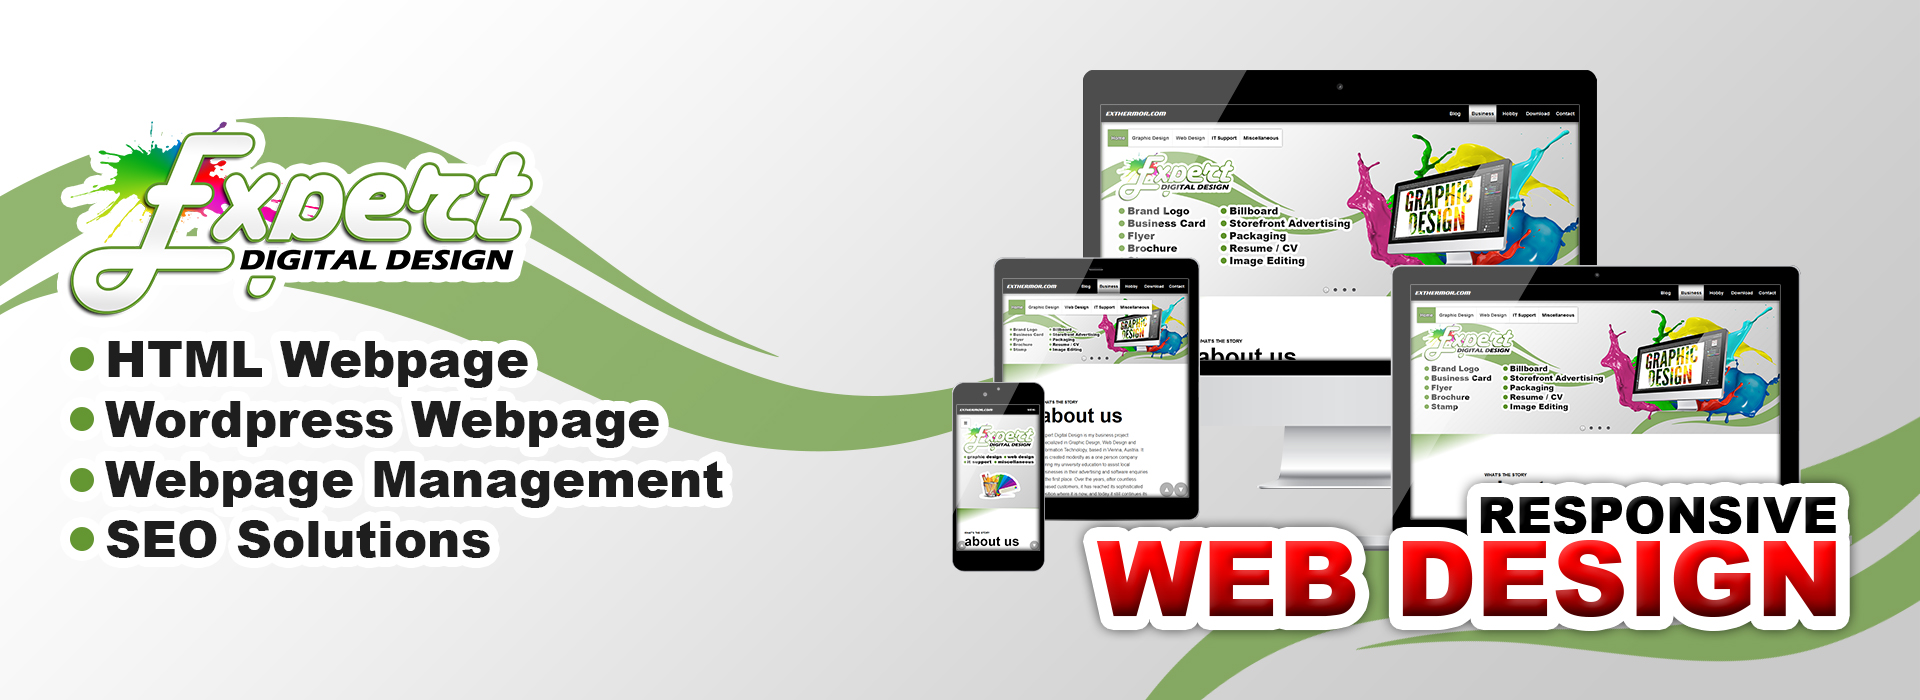 Expert Digital Design Web Design business service offers HTML Webpage, Wordpress Webpage, Webpage Management, and SEO Solutions